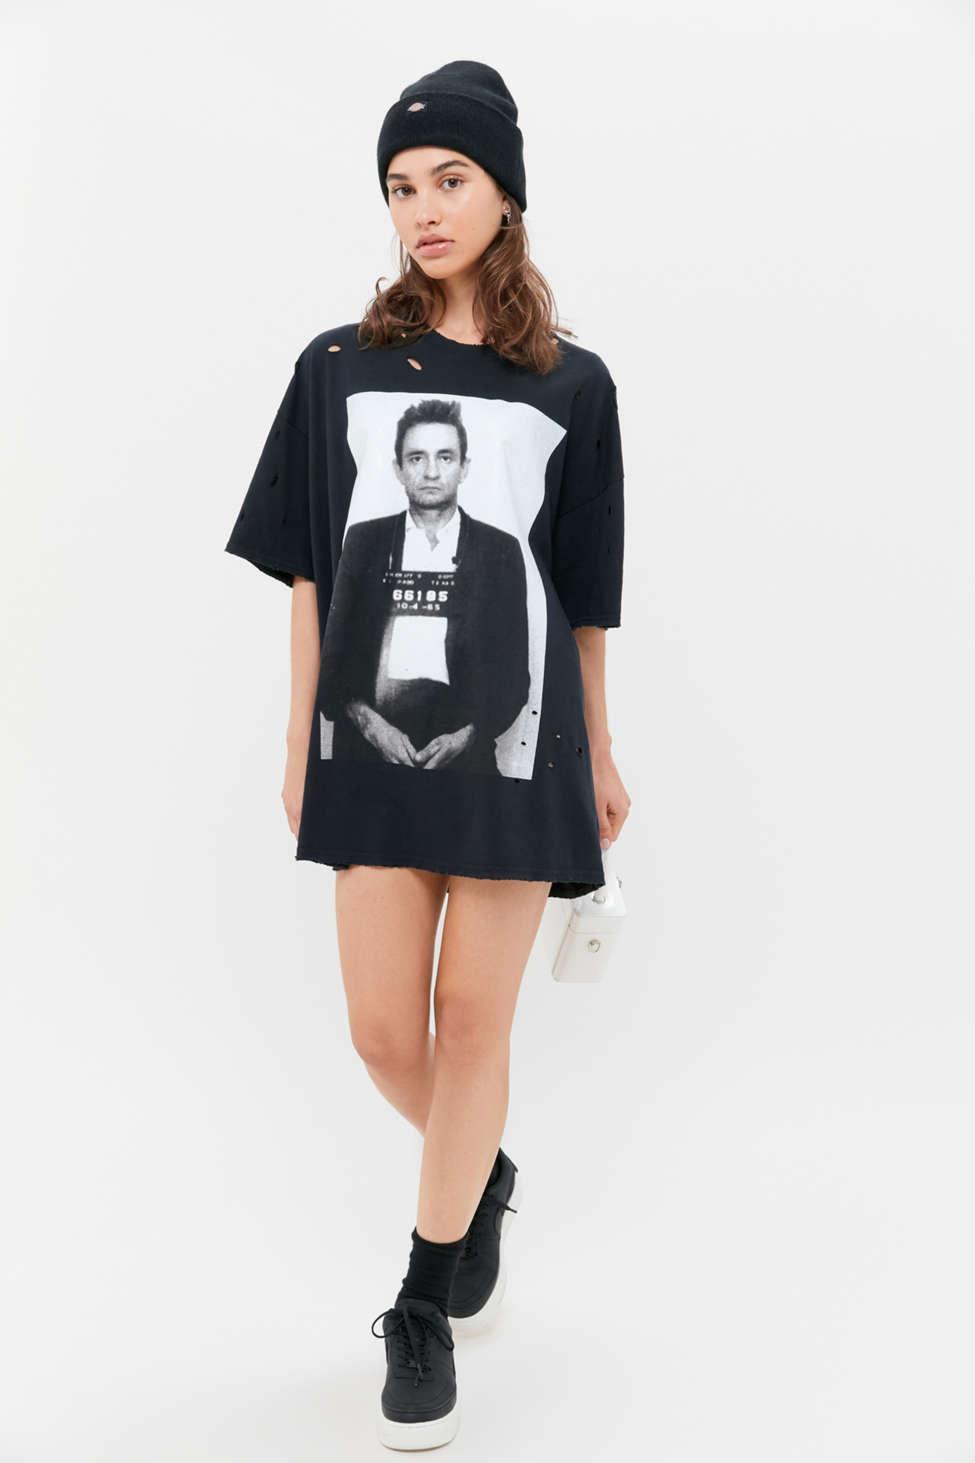 Urban Outfitters Johnny Cash Mug Shot T-shirt Dress | Lyst